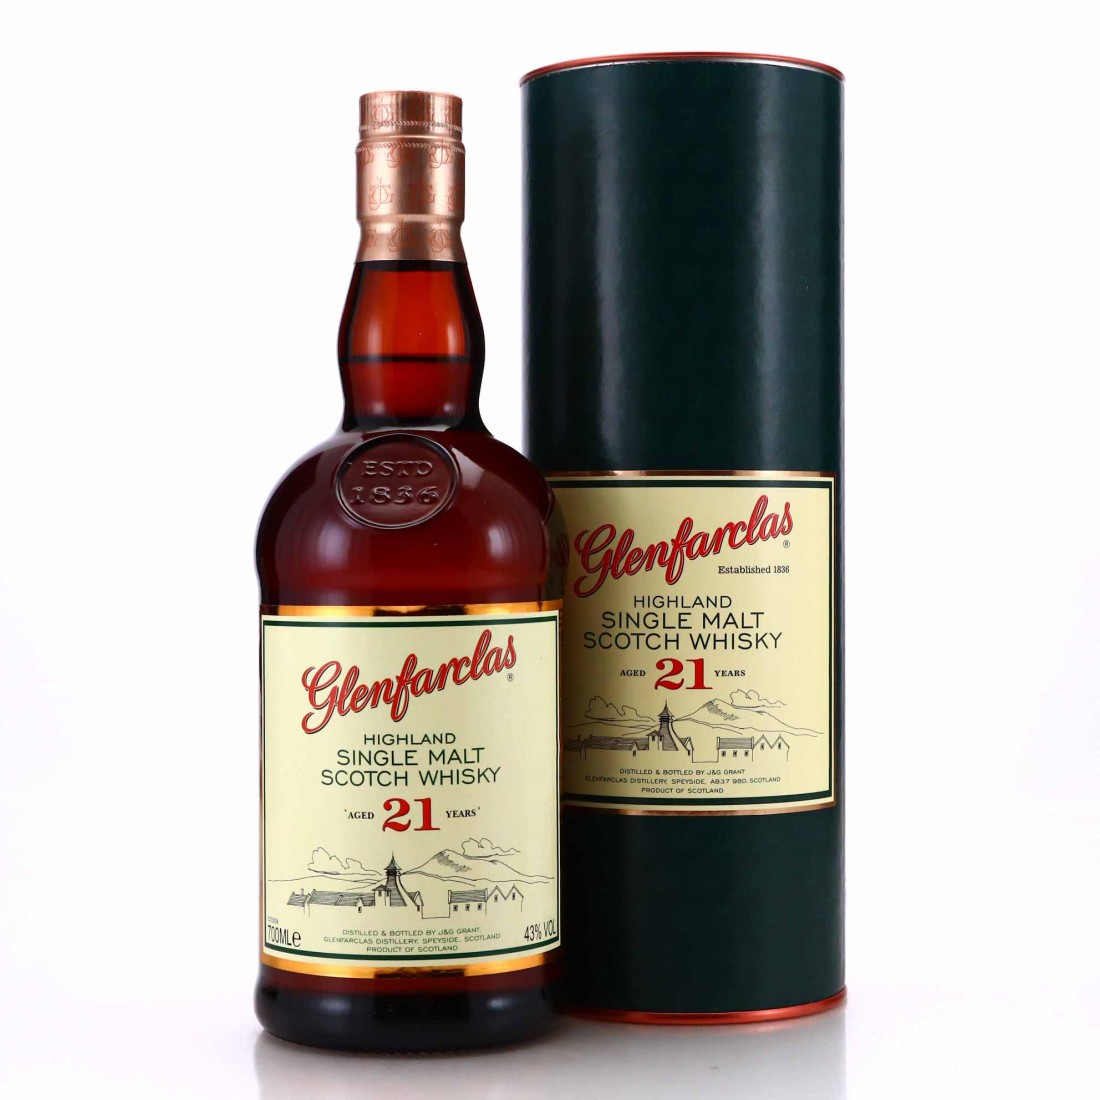 Glenfarclas 21 Years Highland Single Malt Scotch Whisky – Speyside, Scotland